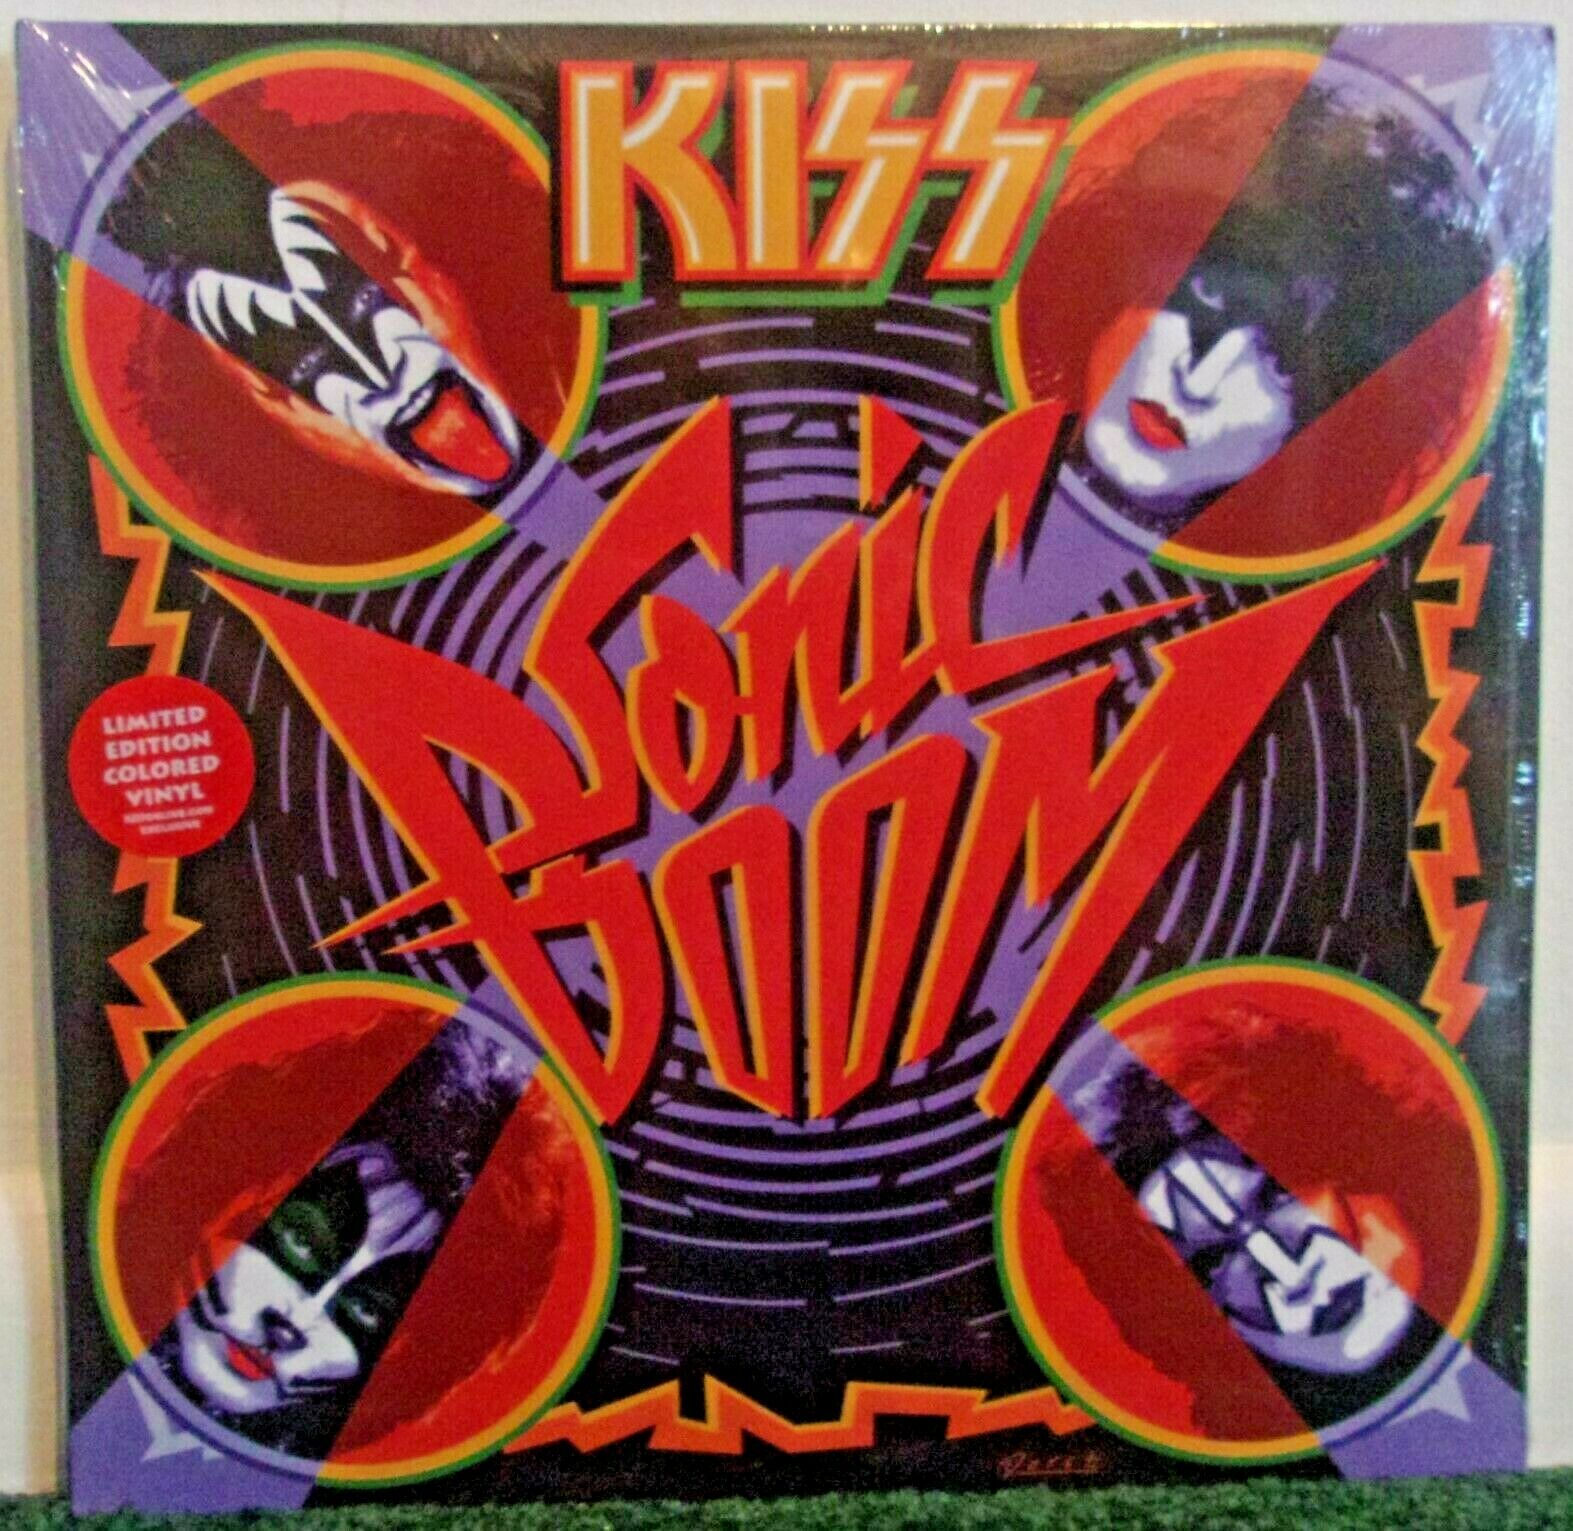 popsike.com - KISS SONIC BOOM U.S. 2010 Red Vinyl Sealed NM LP W/ Poster  200902 - auction details